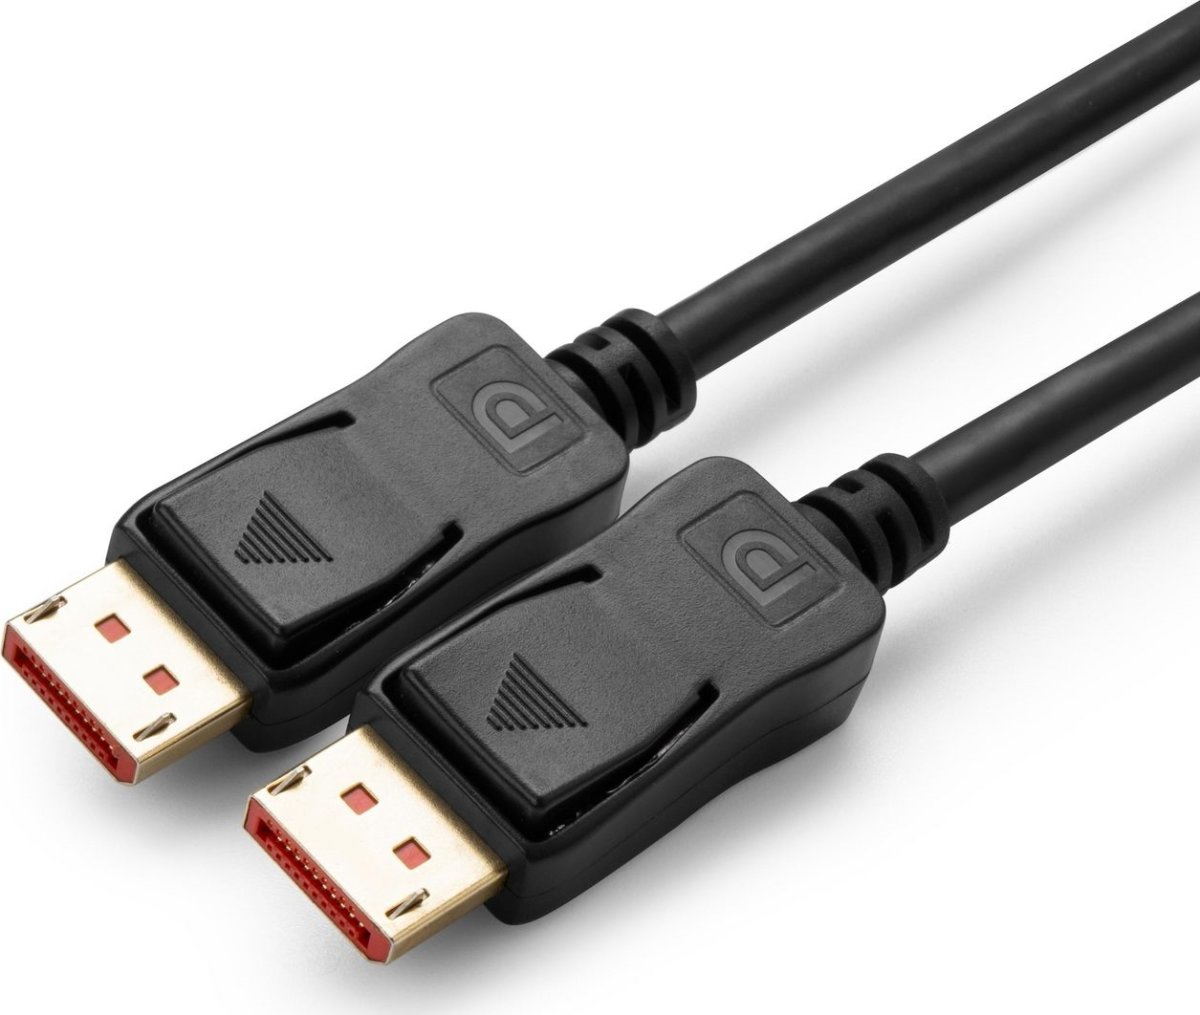 MicroConnect 8K DisplayPort 1.4 kabel | 1 m